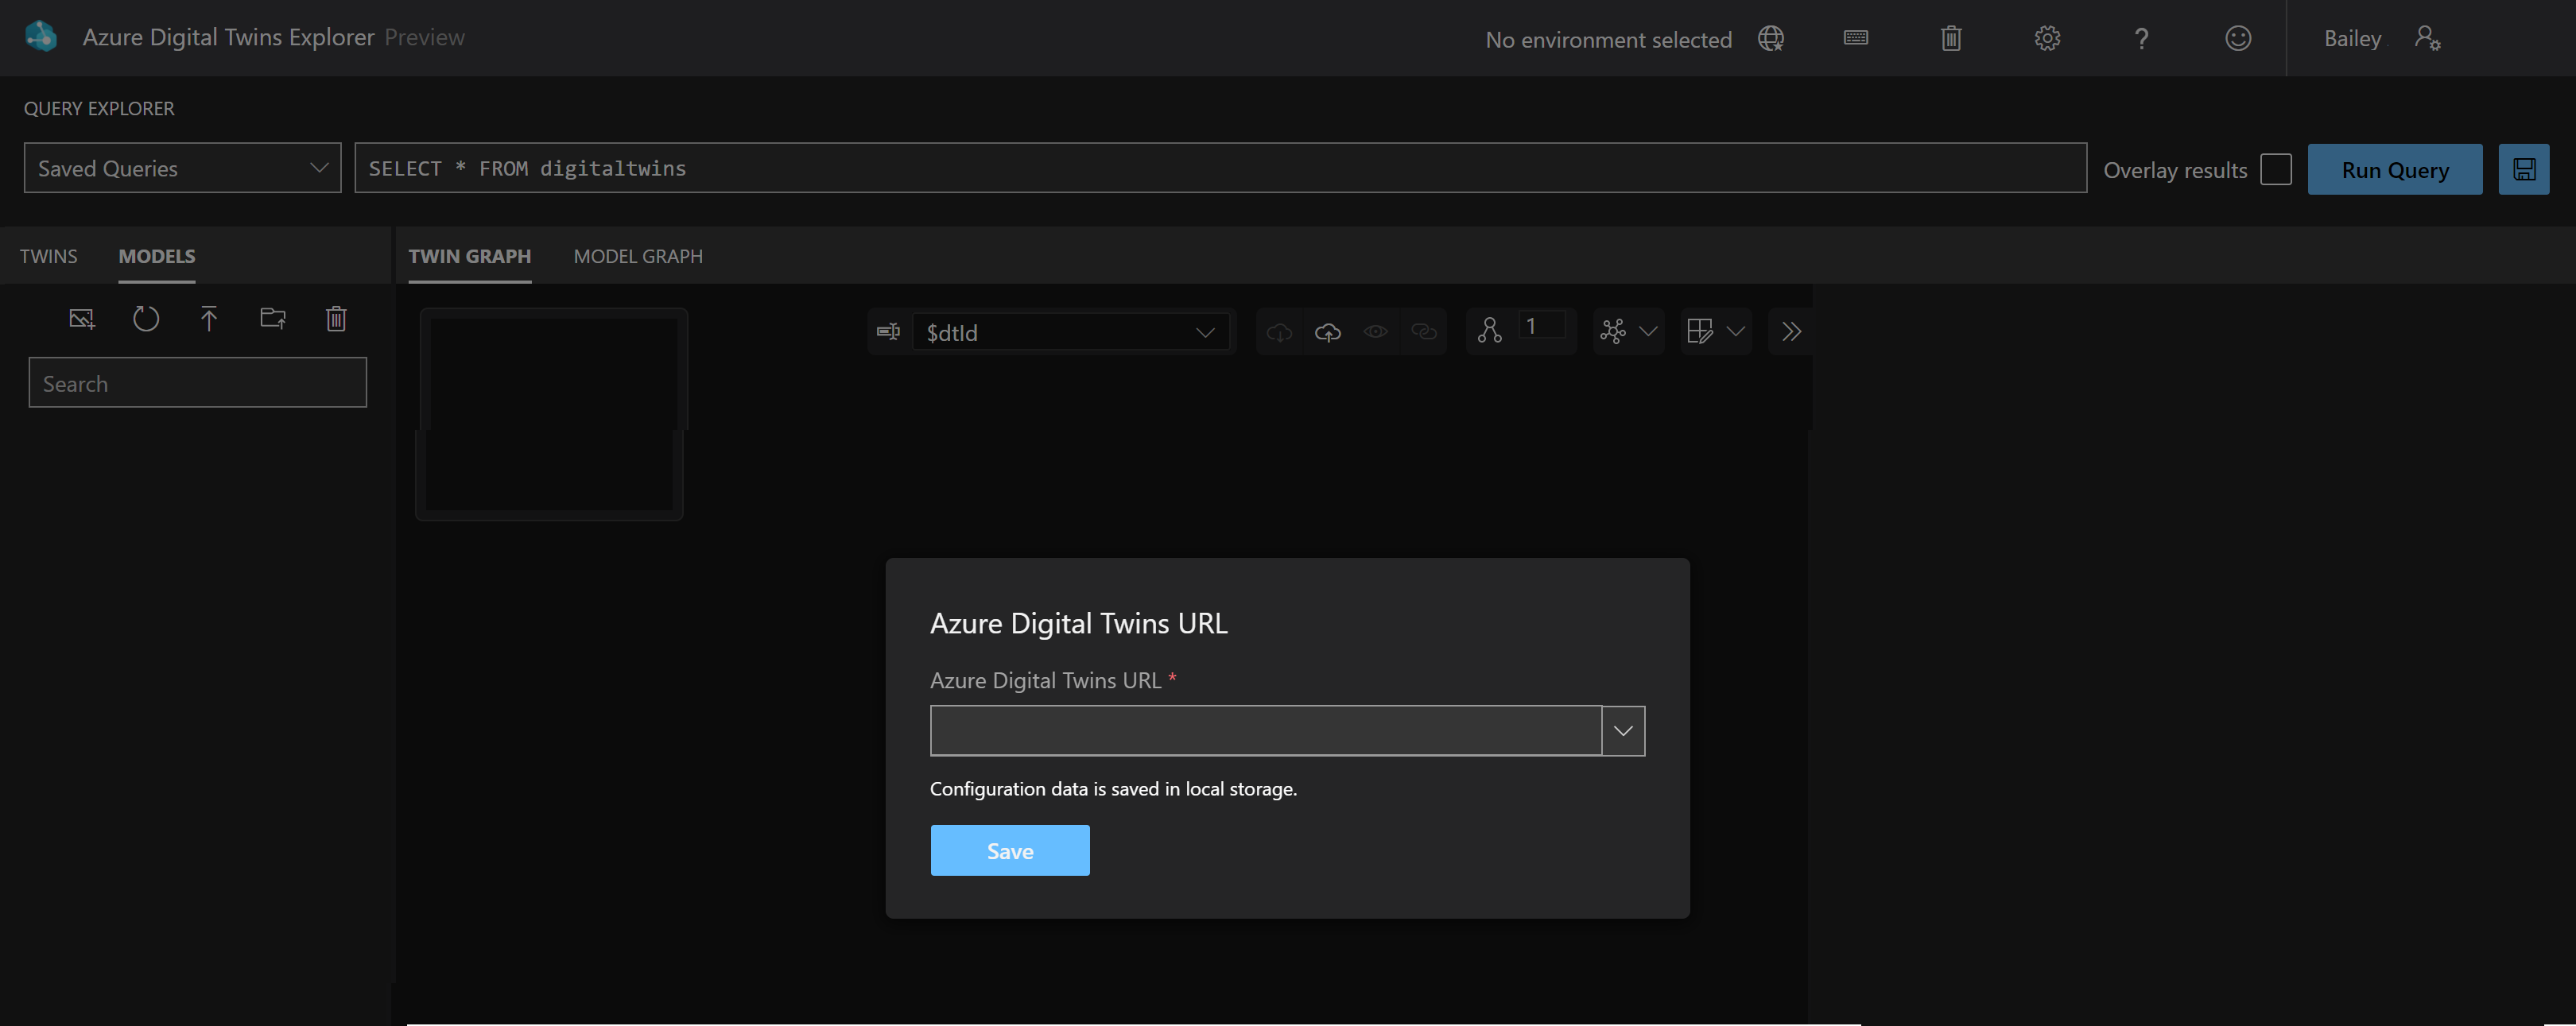 Screenshot of Azure Digital Twins Explorer. The Azure Digital Twins URL modal displays an empty editable box for the Azure Digital Twins URL.